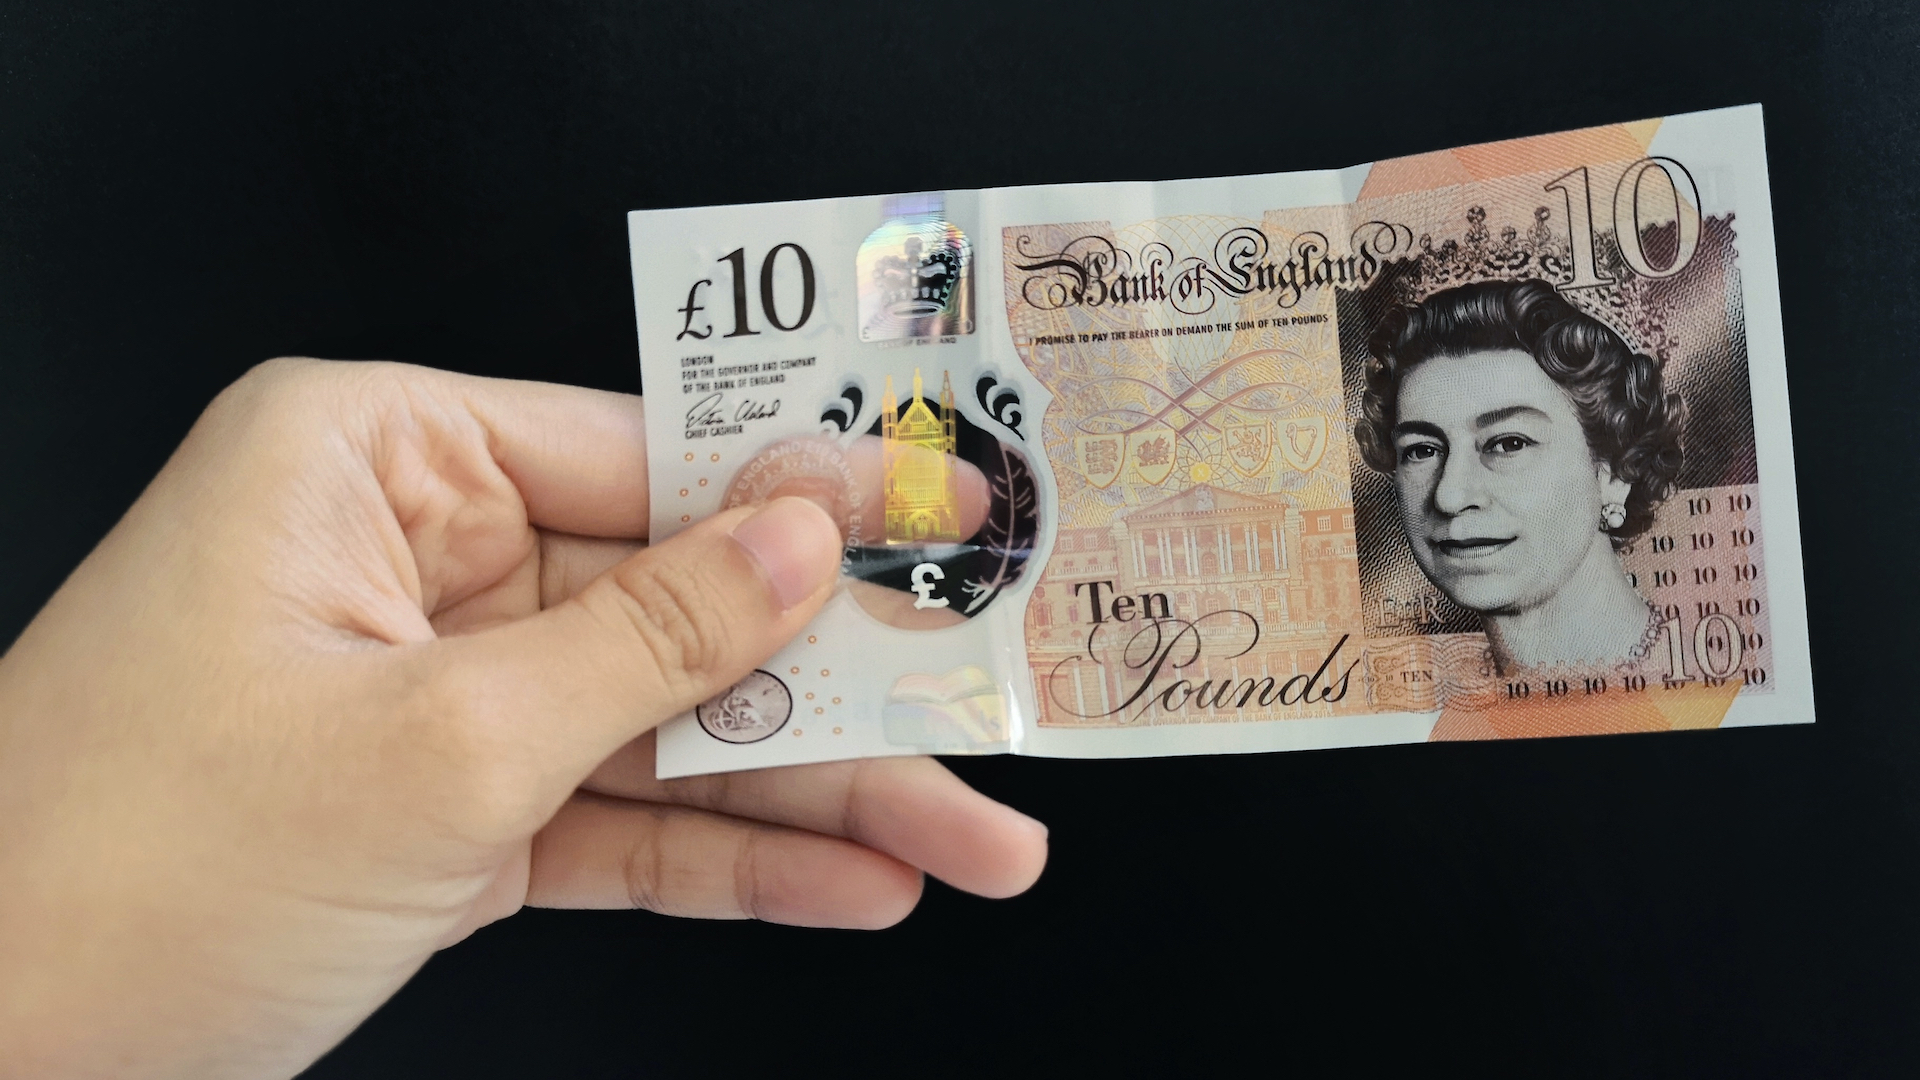 A crisp £10 note